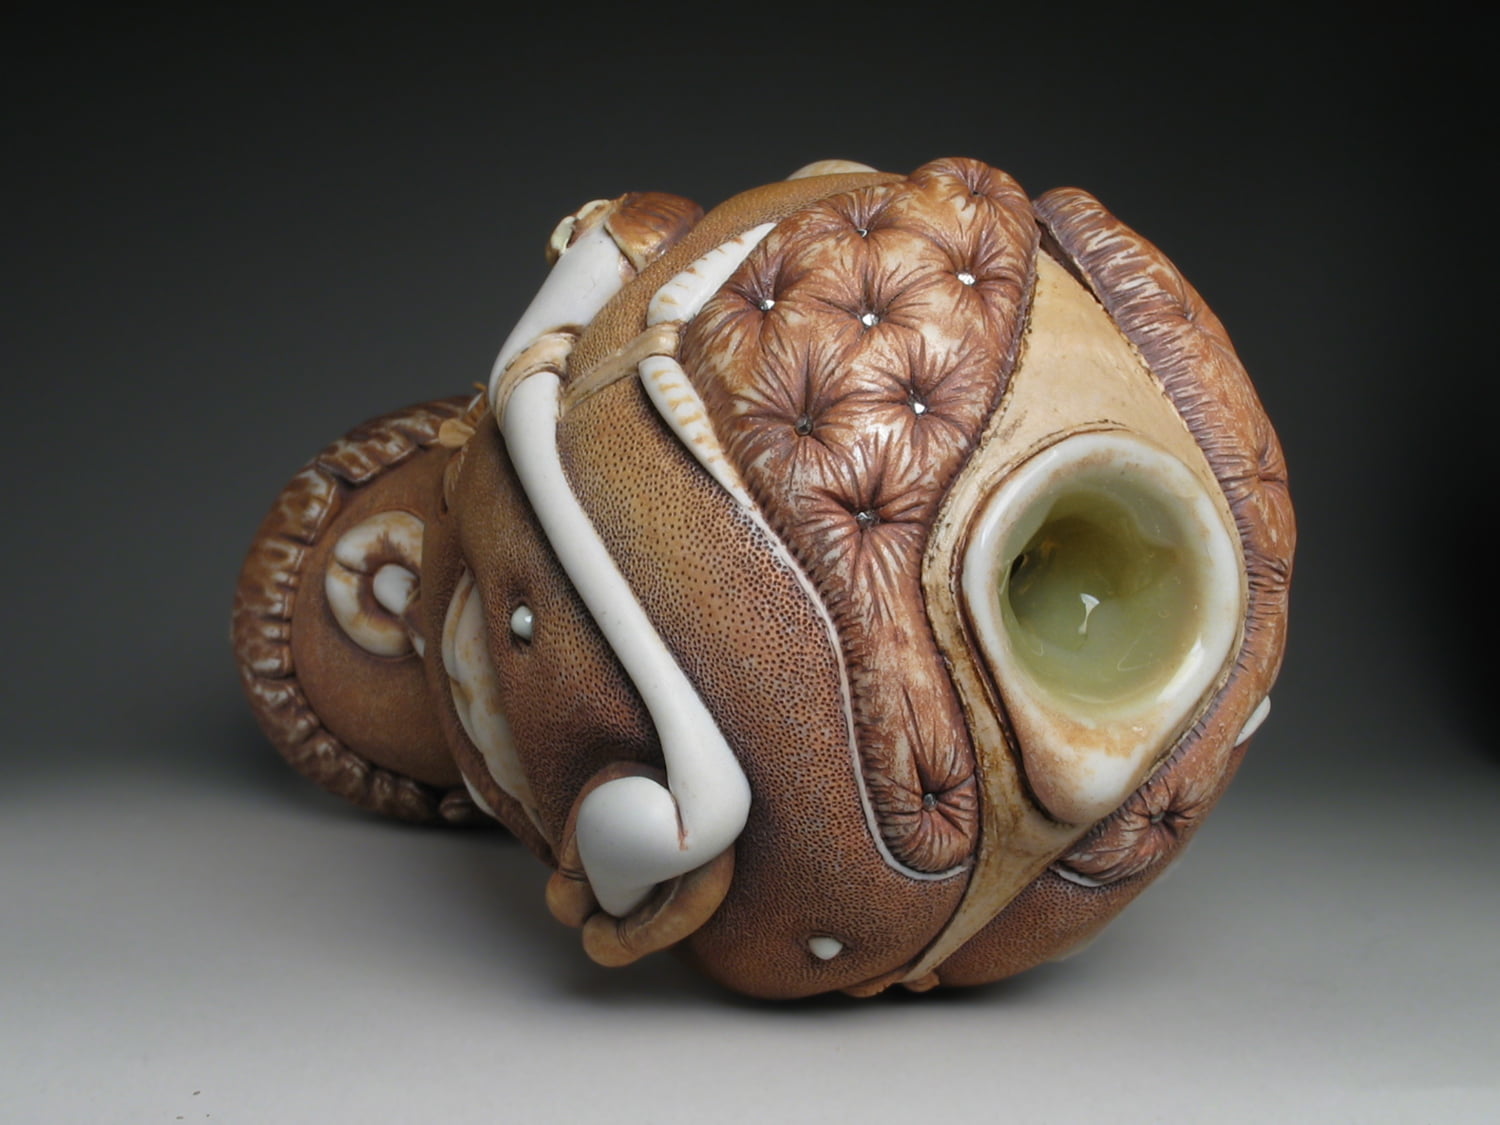 Jason Briggs "Lover" (detail 1). Porcelain, hair, and mixed media. Sculptural ceramic art object.